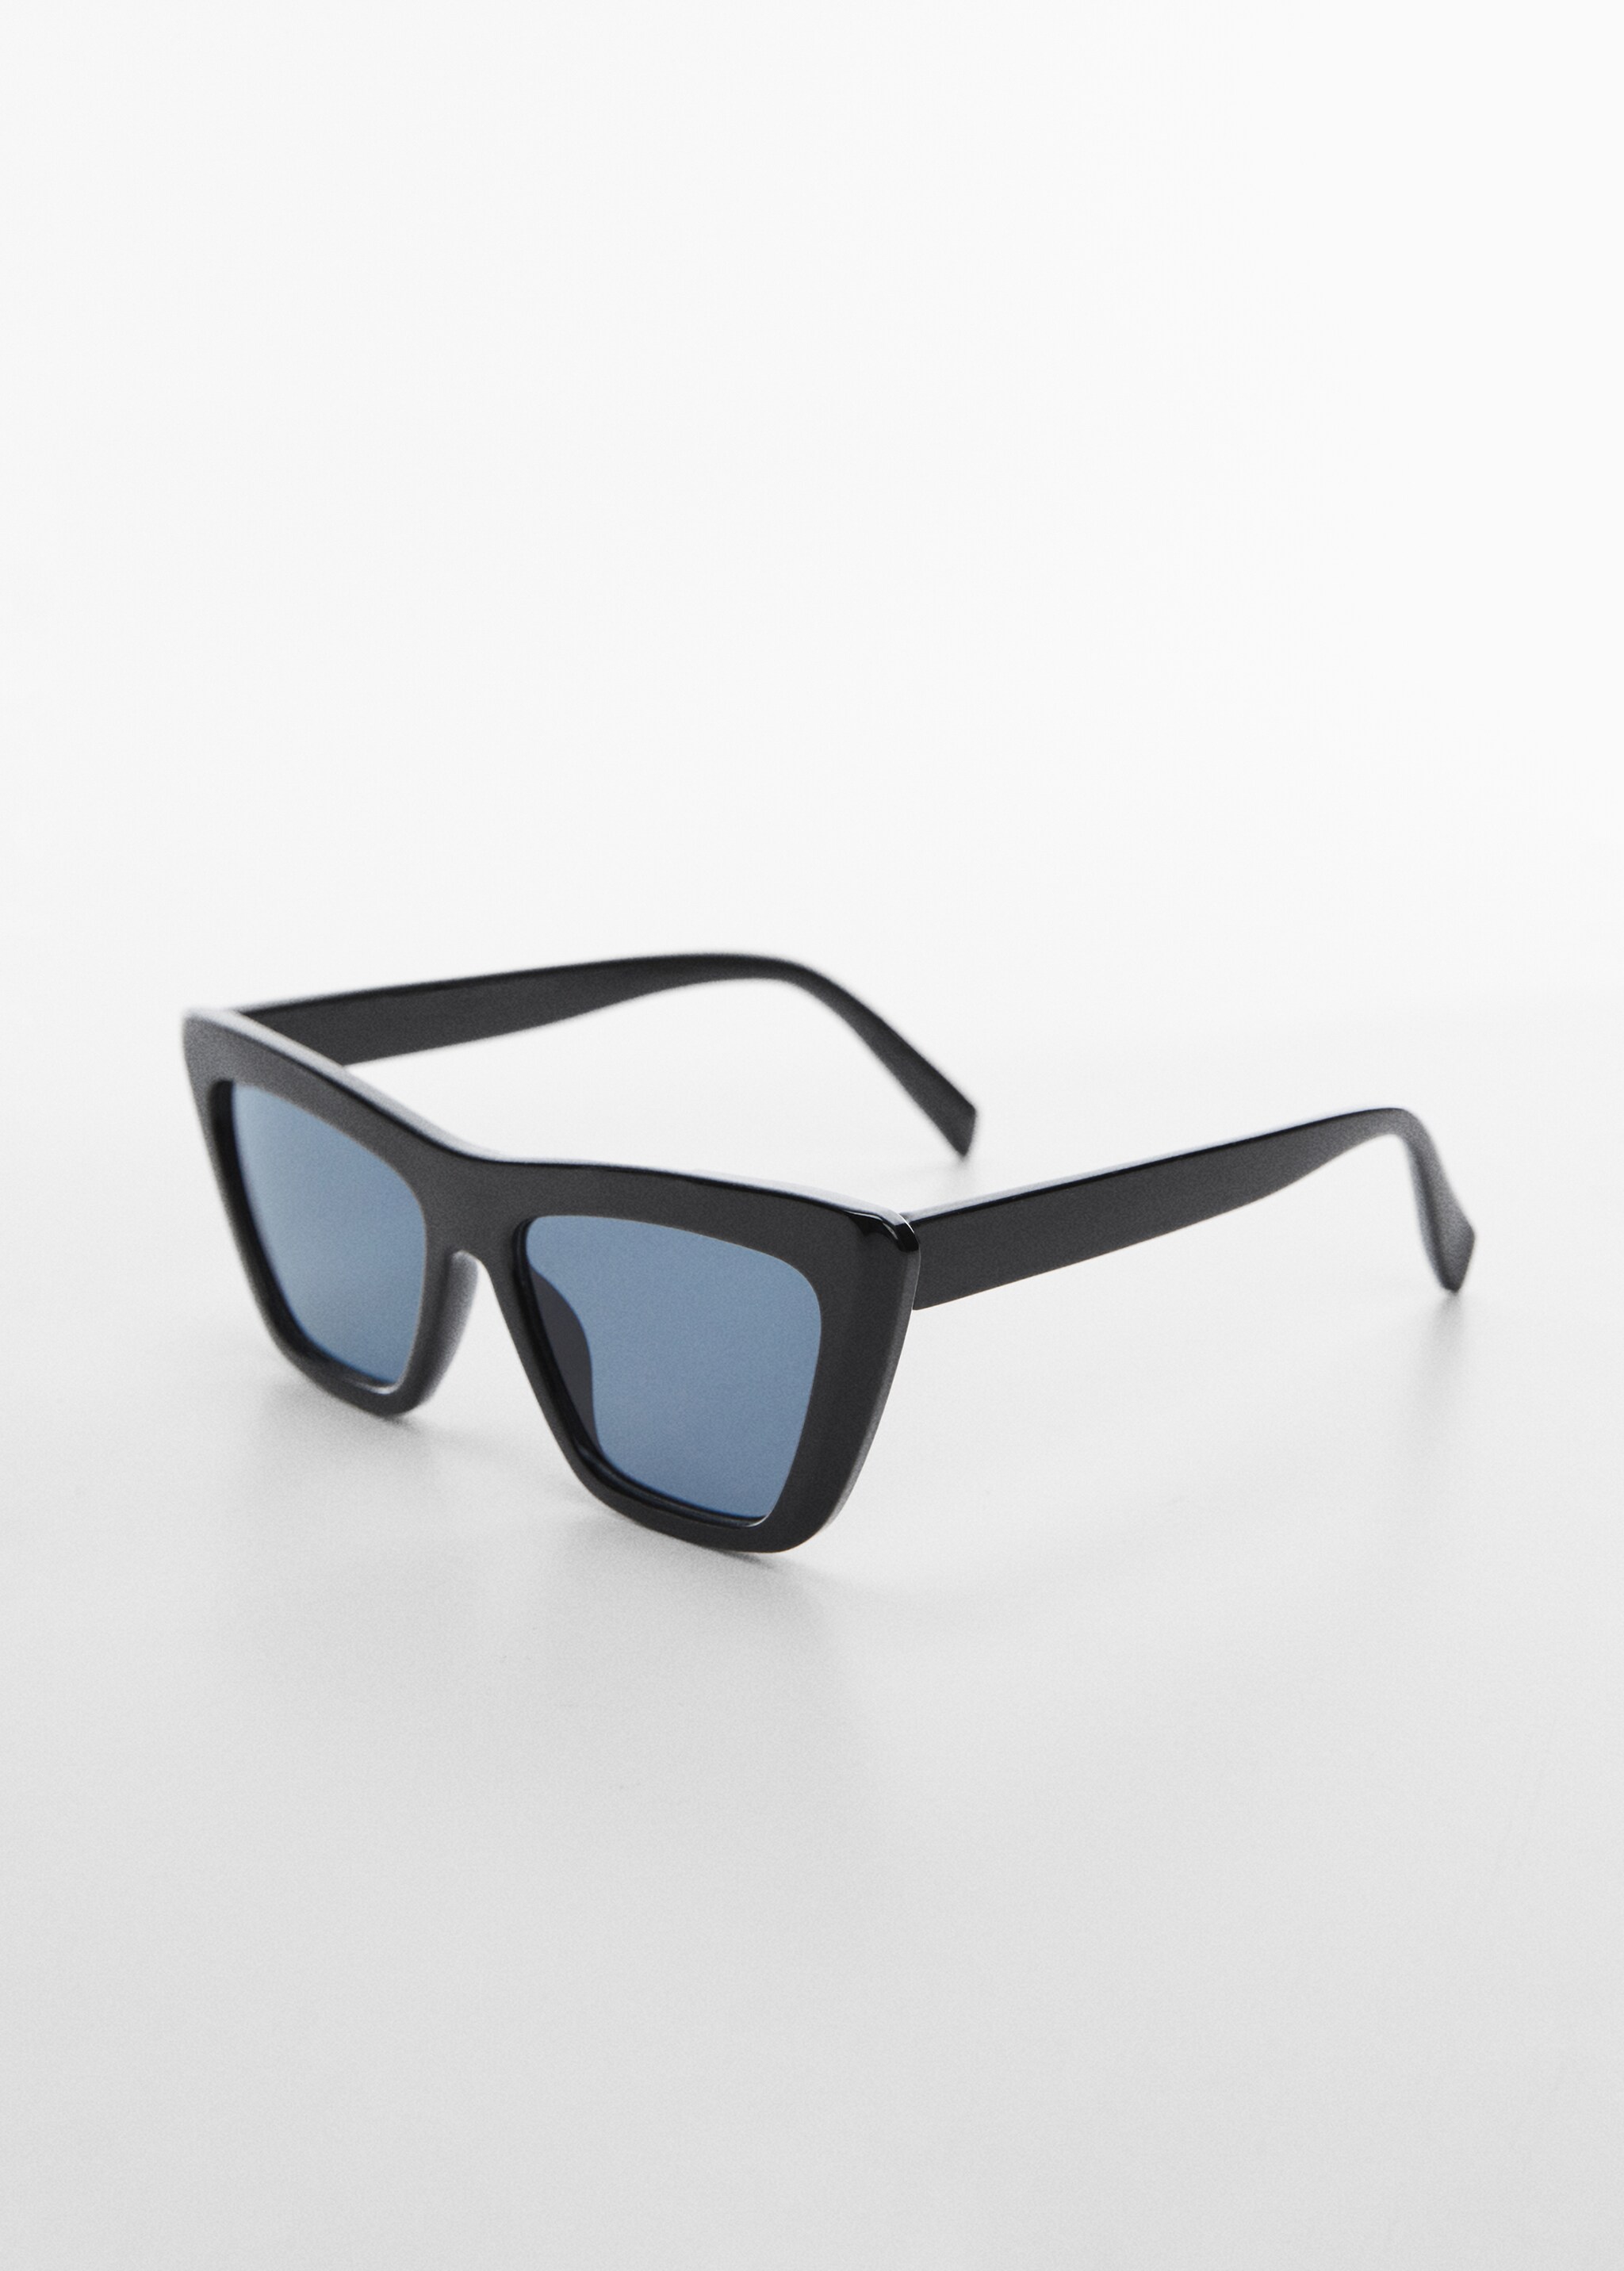 Cat-eye sunglasses - Medium plane